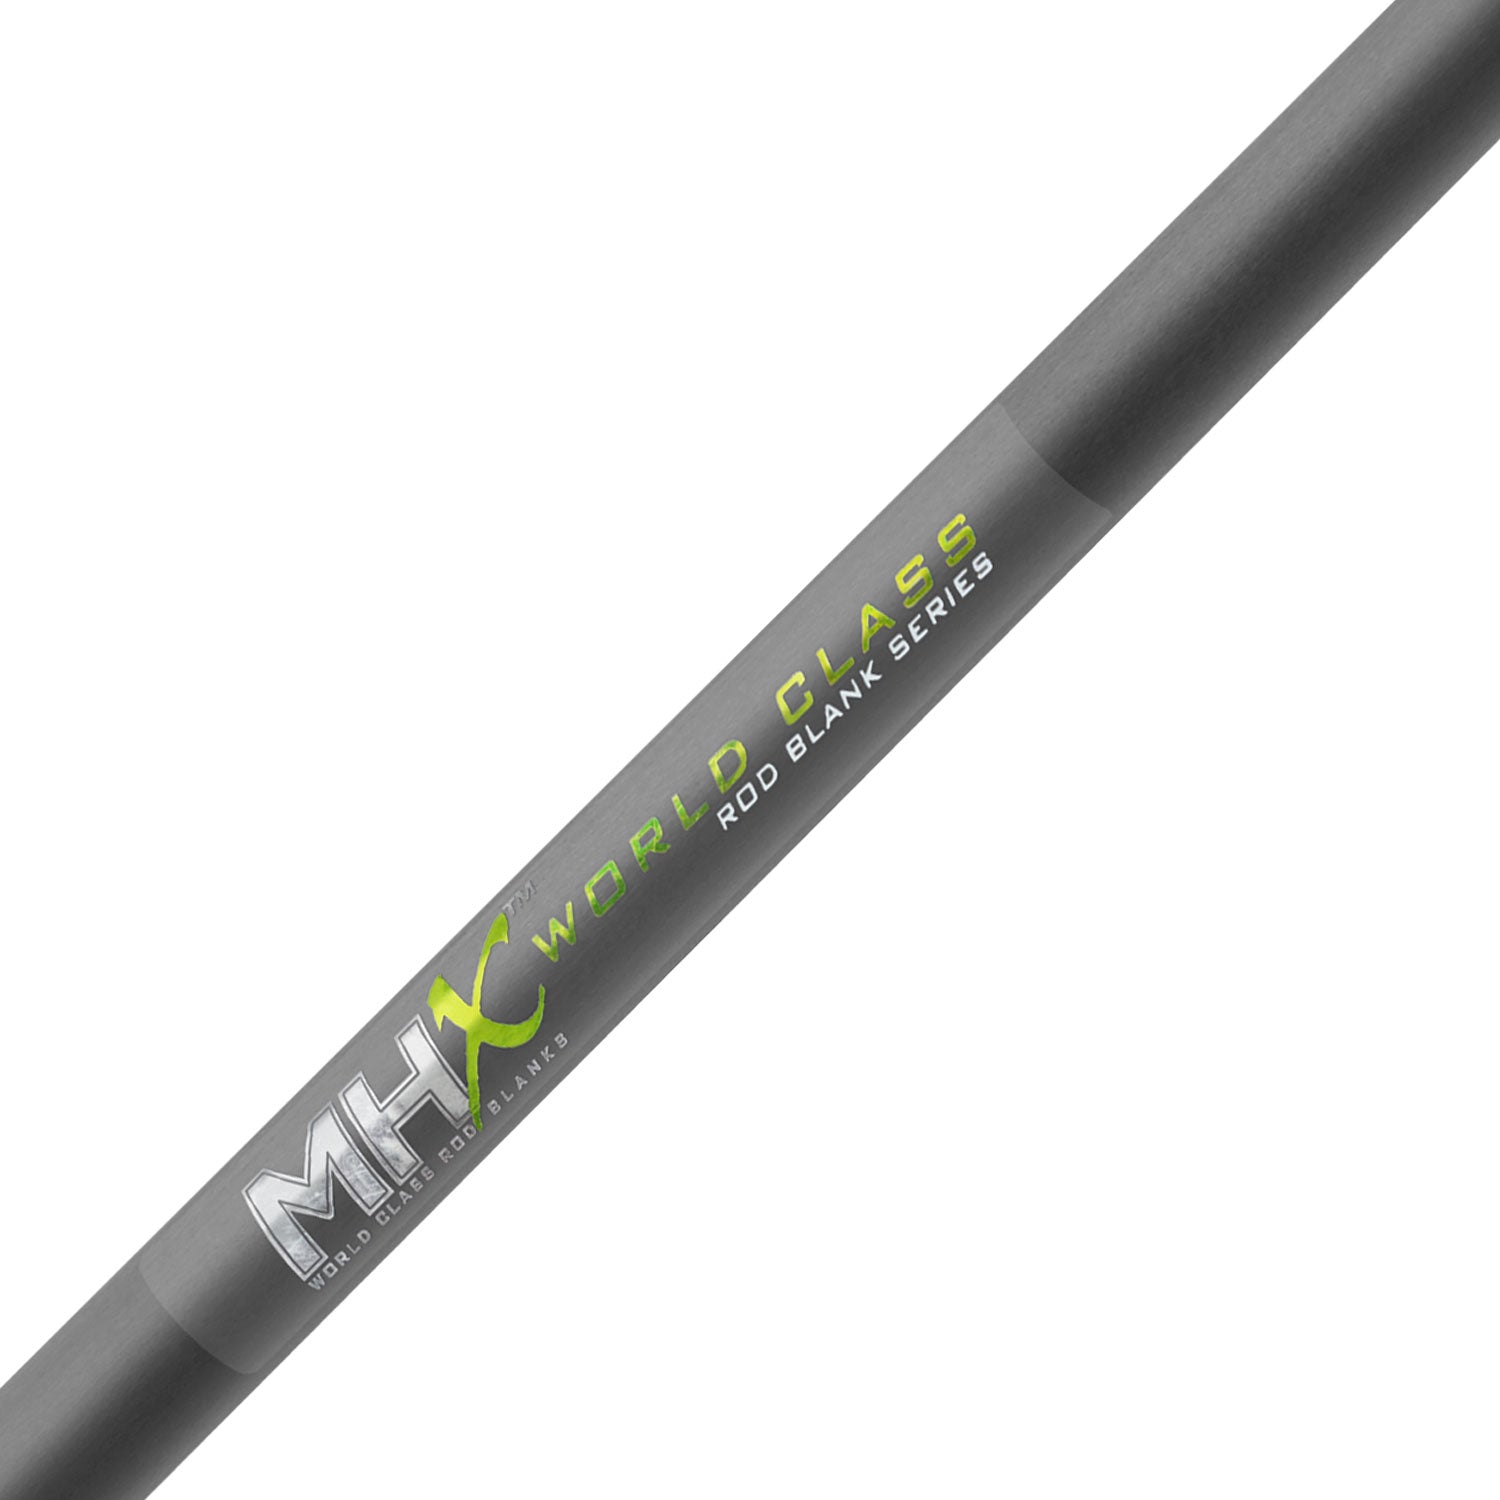 MHX 7'6" Medium Popping Rod Blank - P903-MHX